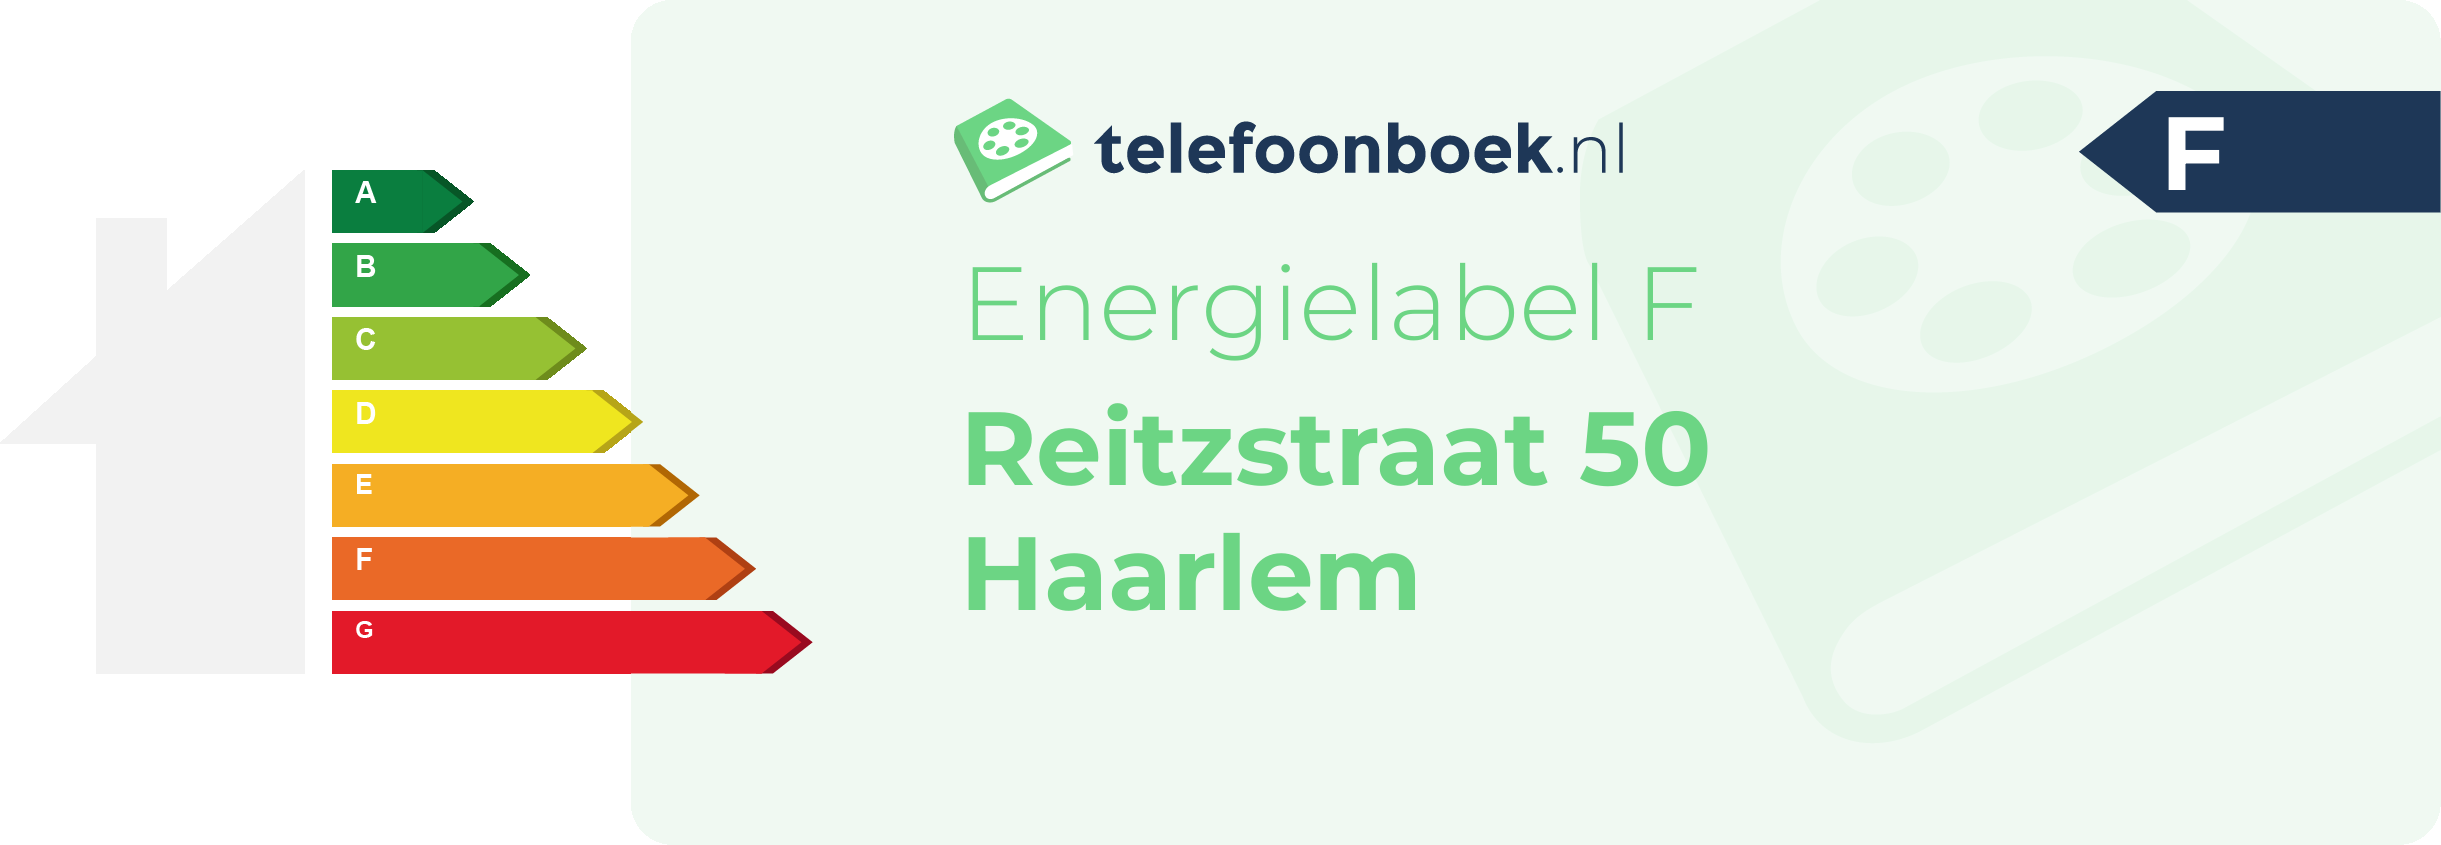 Energielabel Reitzstraat 50 Haarlem